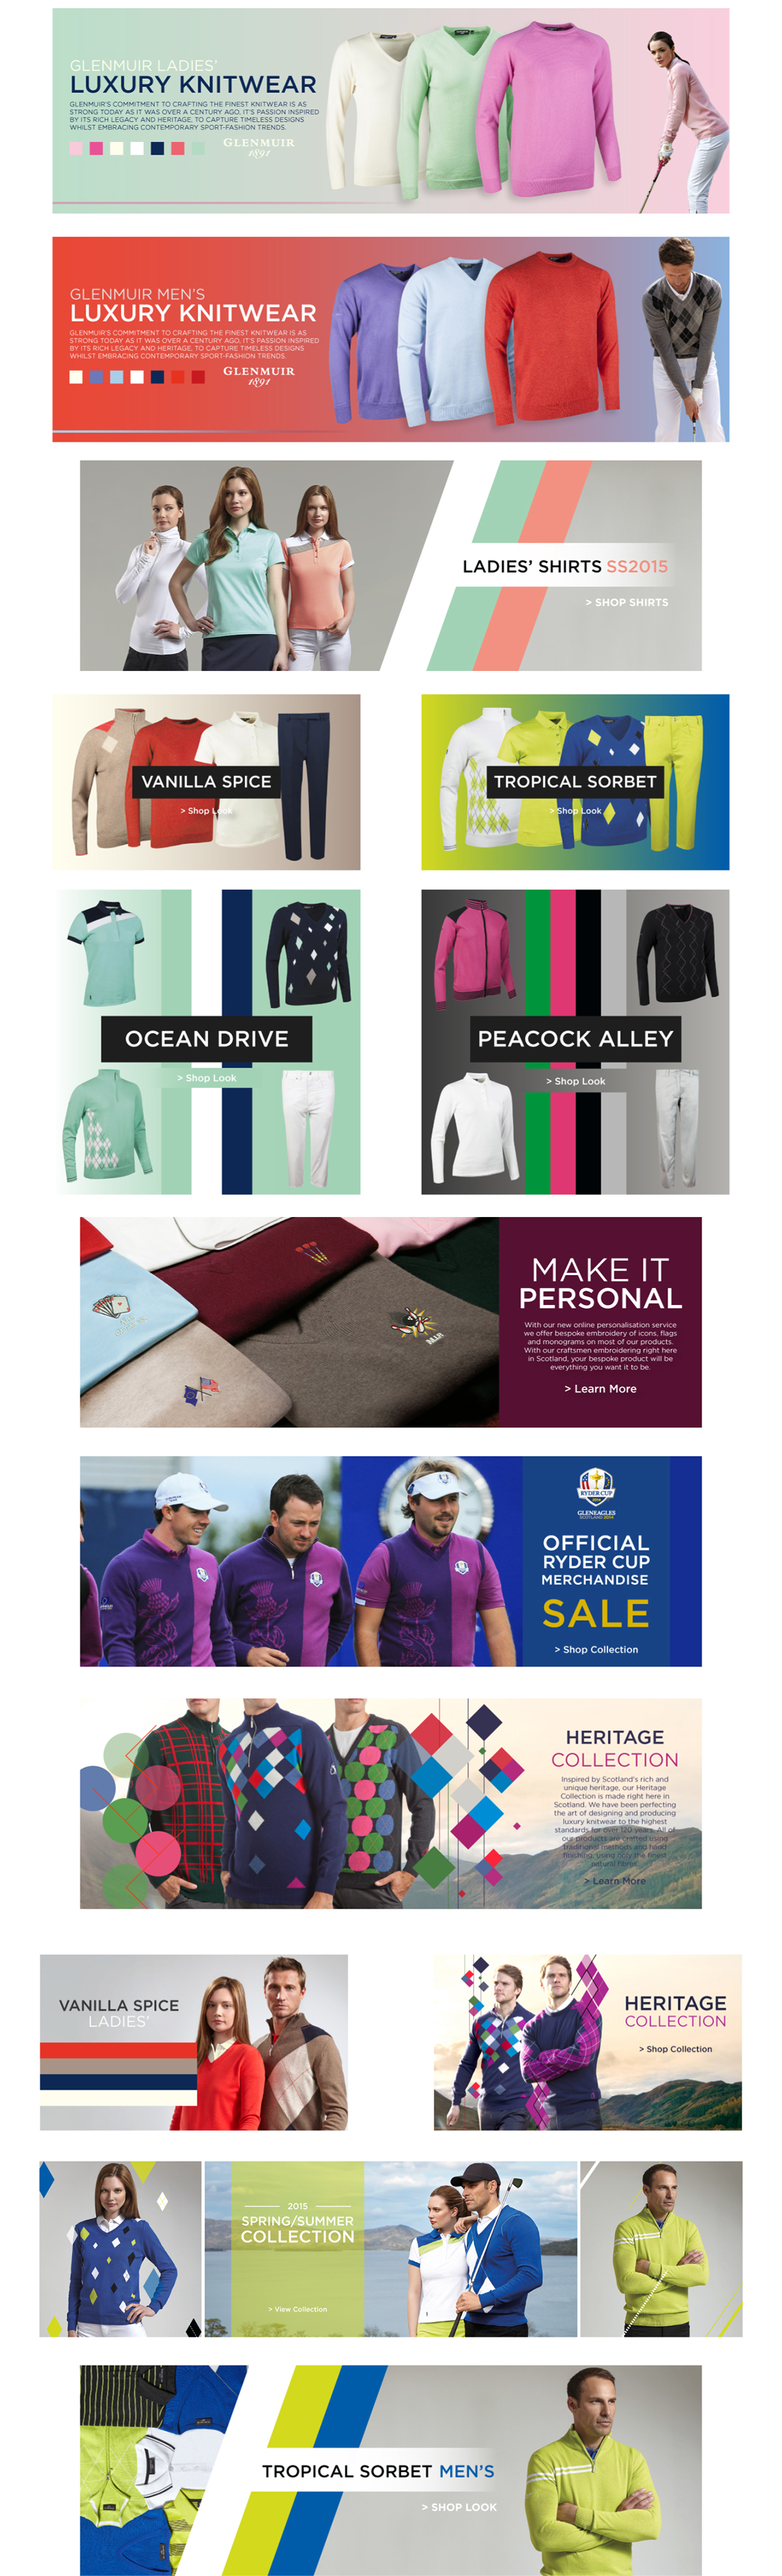 Website design marketing   glenmuir golf banner banners ad advert scottish scotland Clothing